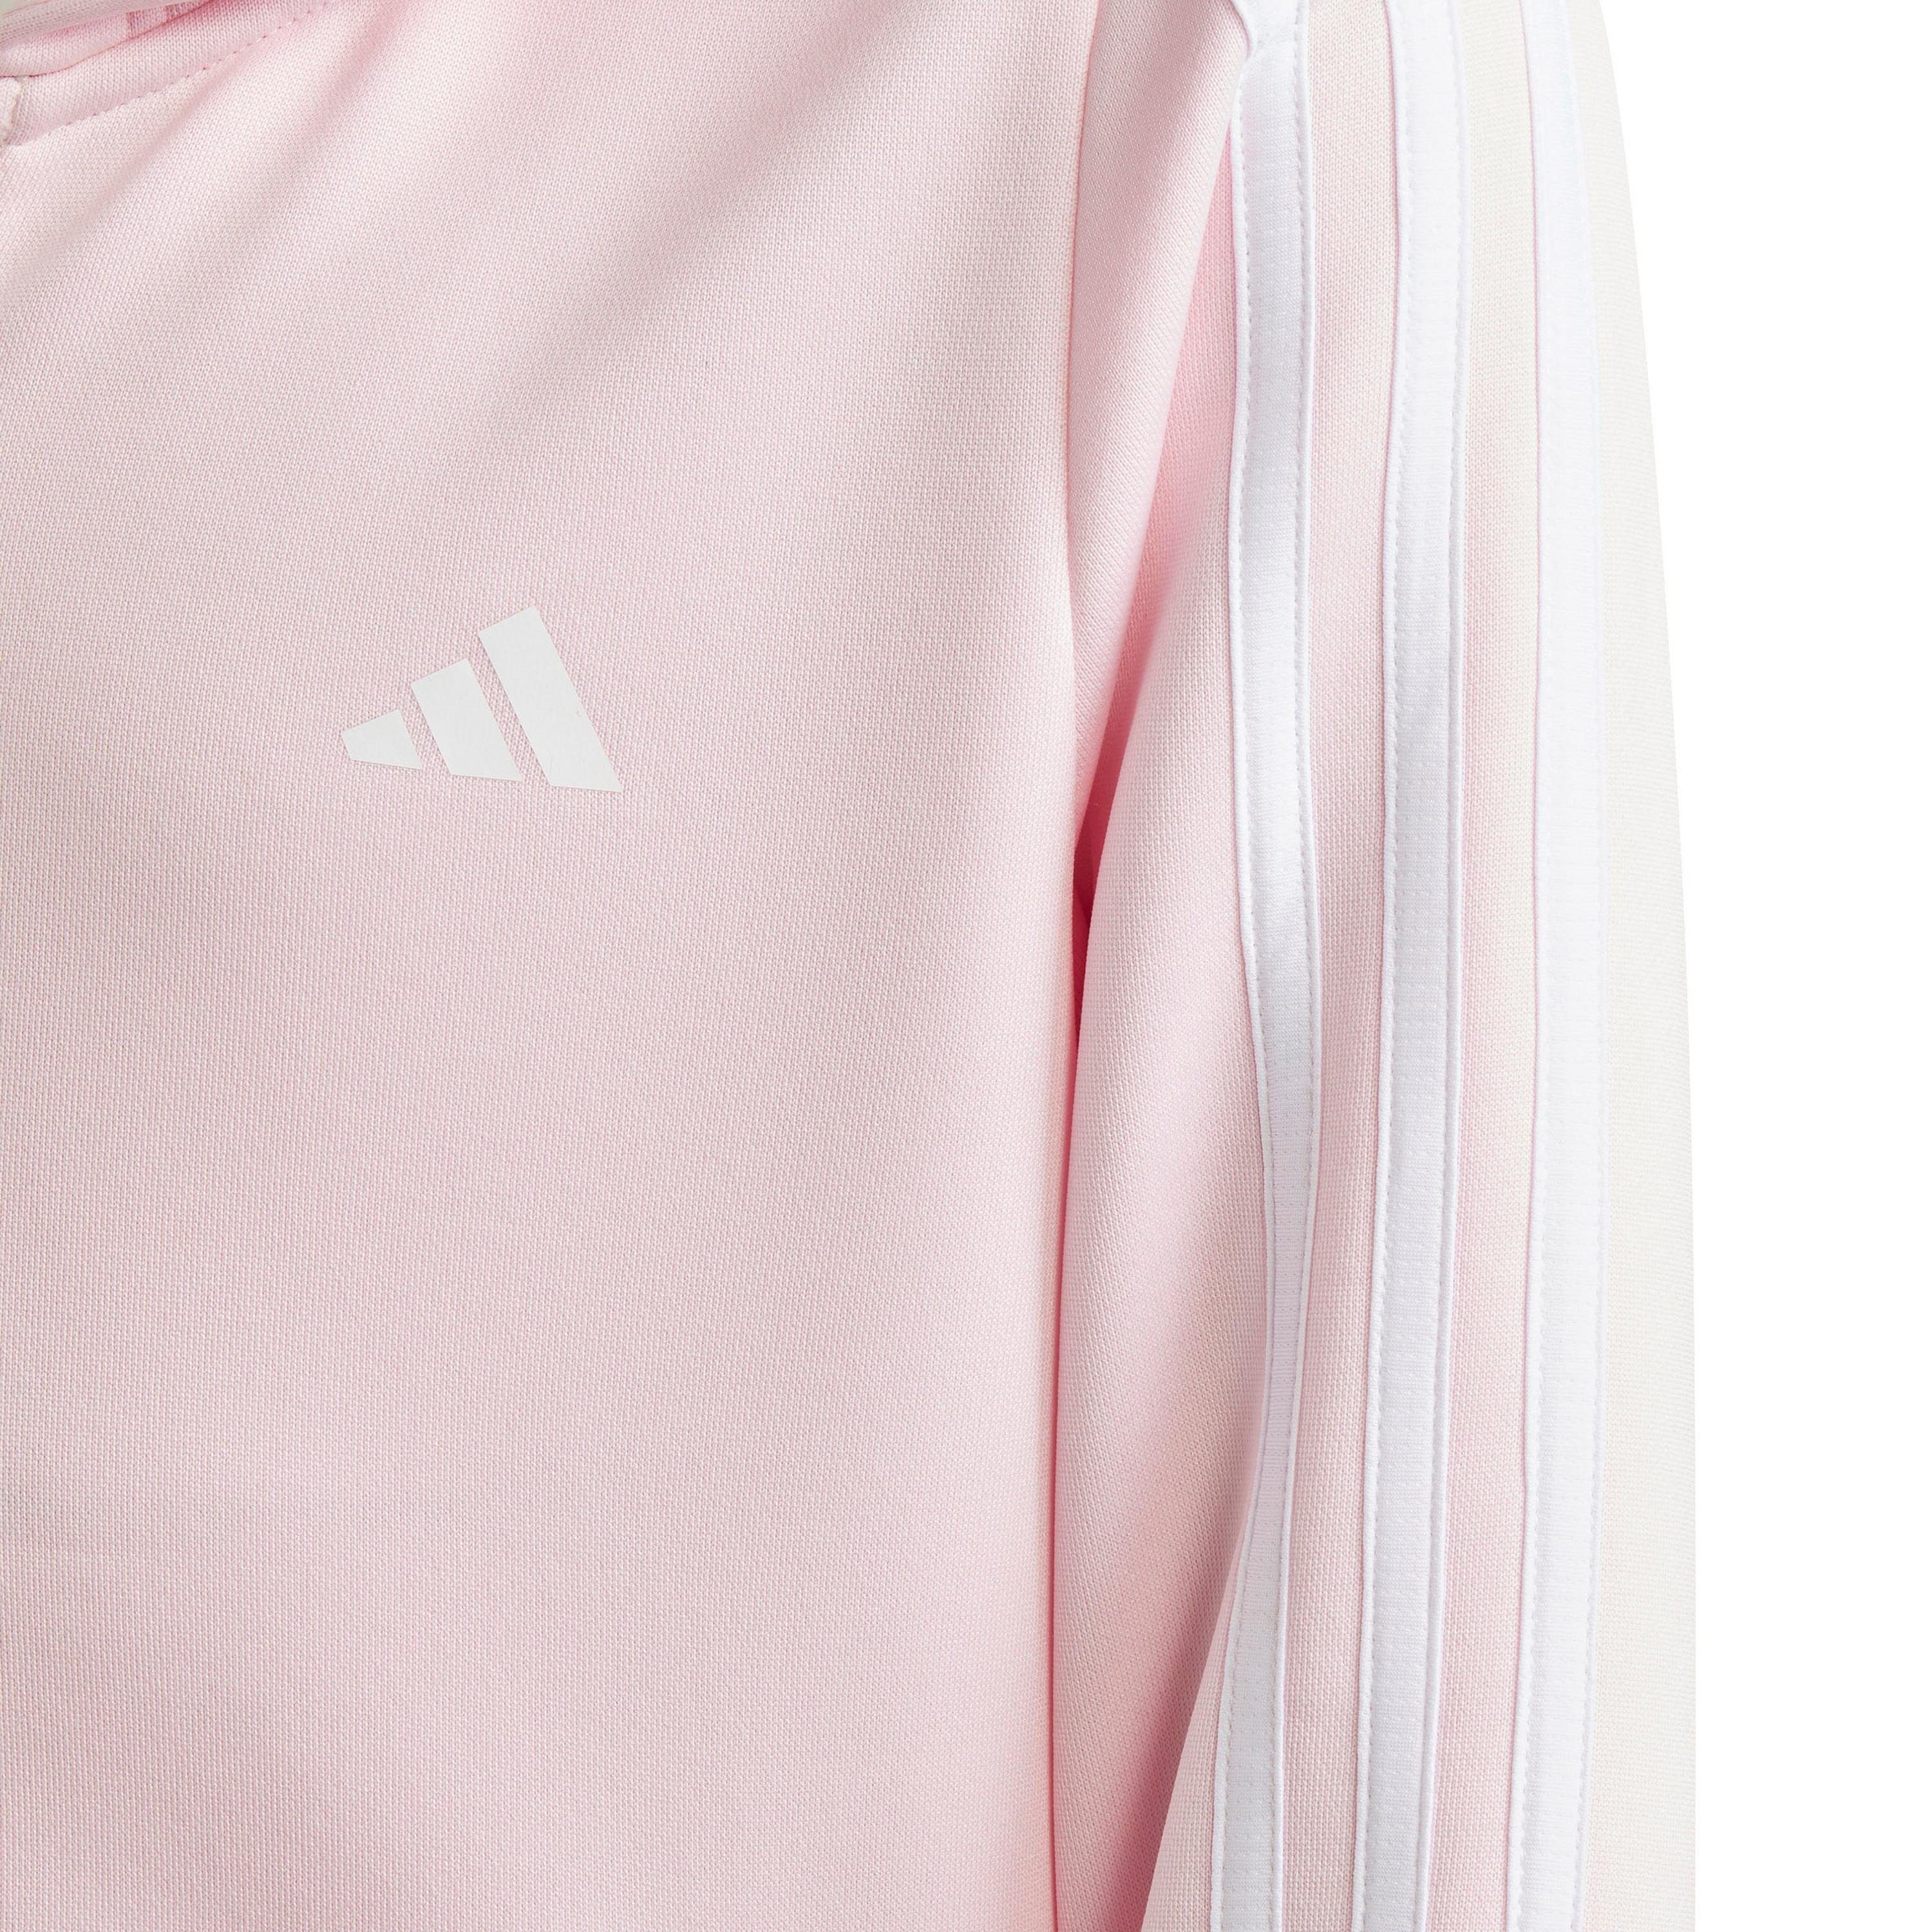 clear Performance Trainingsjacke pink-white adidas